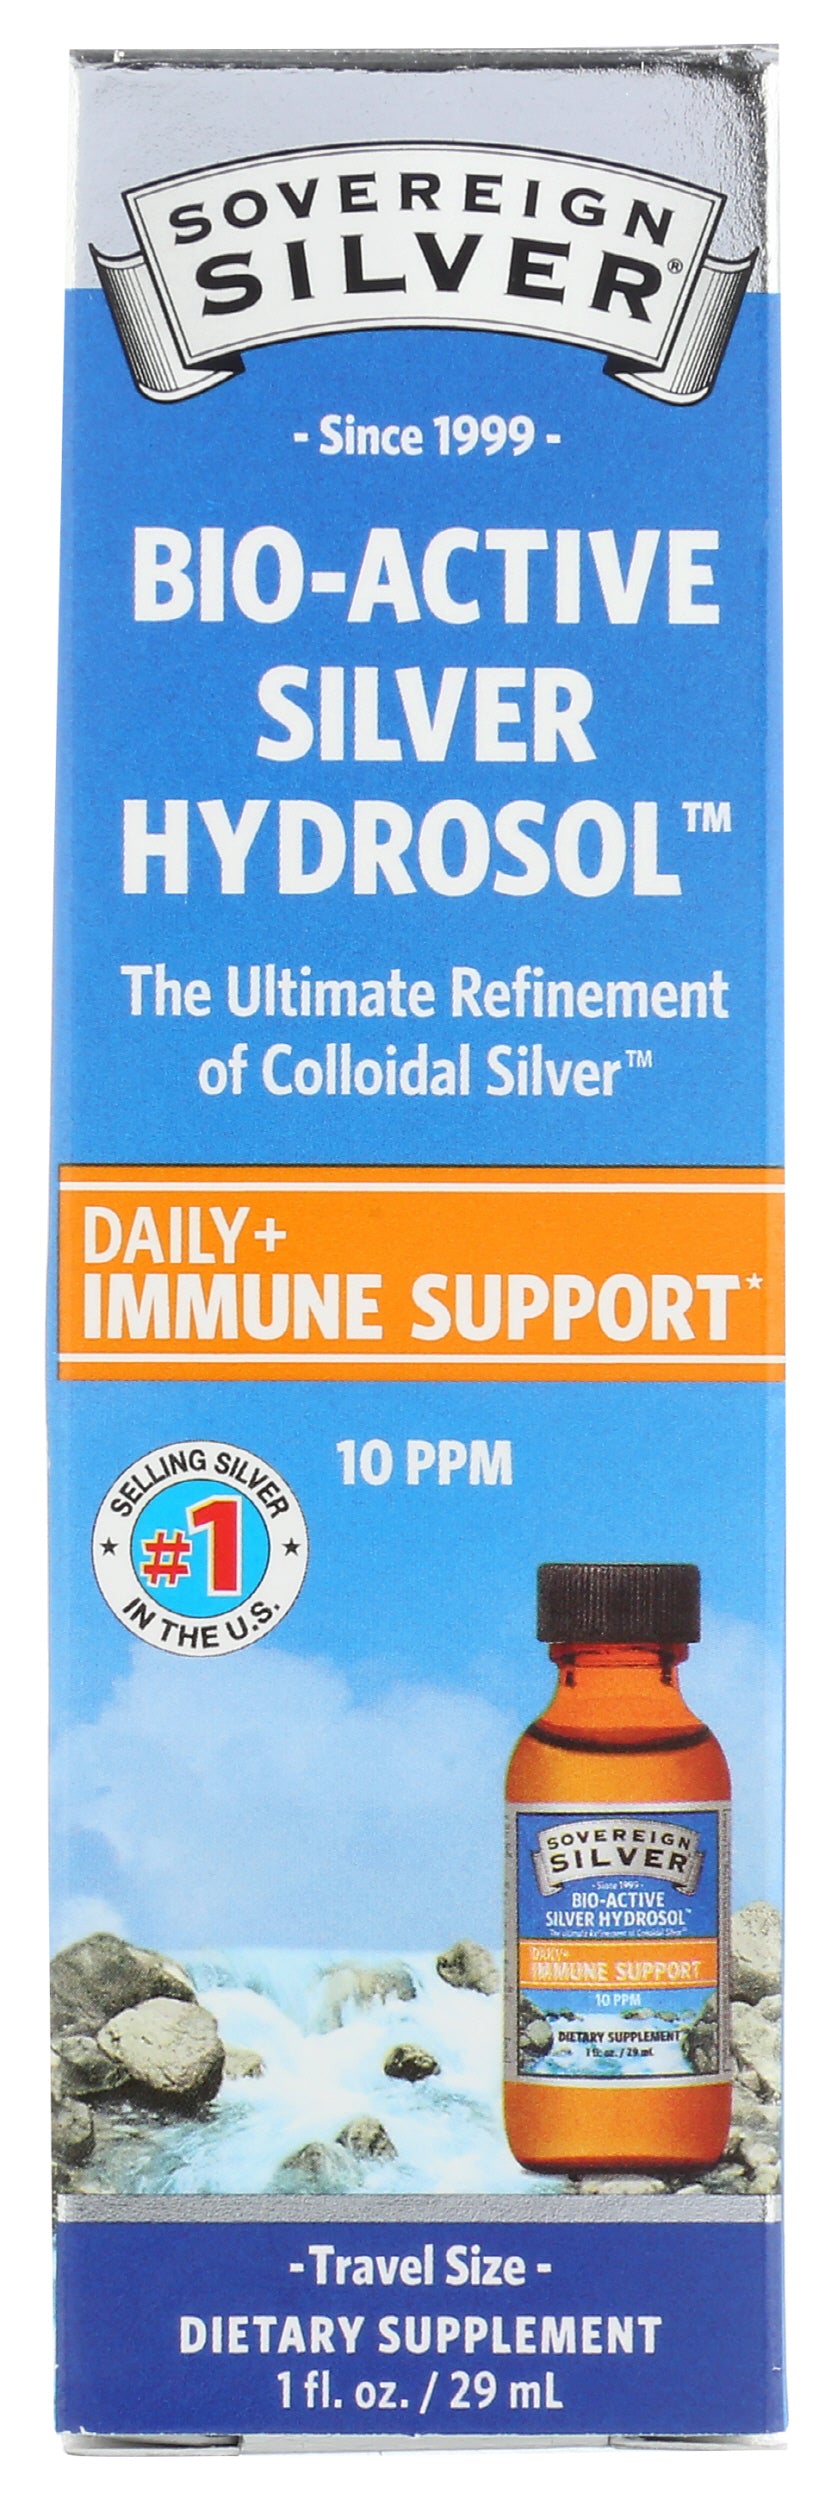 Sovereign Silver Bio-Active Silver Hydrosol Travel Size 1 Fl. Oz. Front of Box